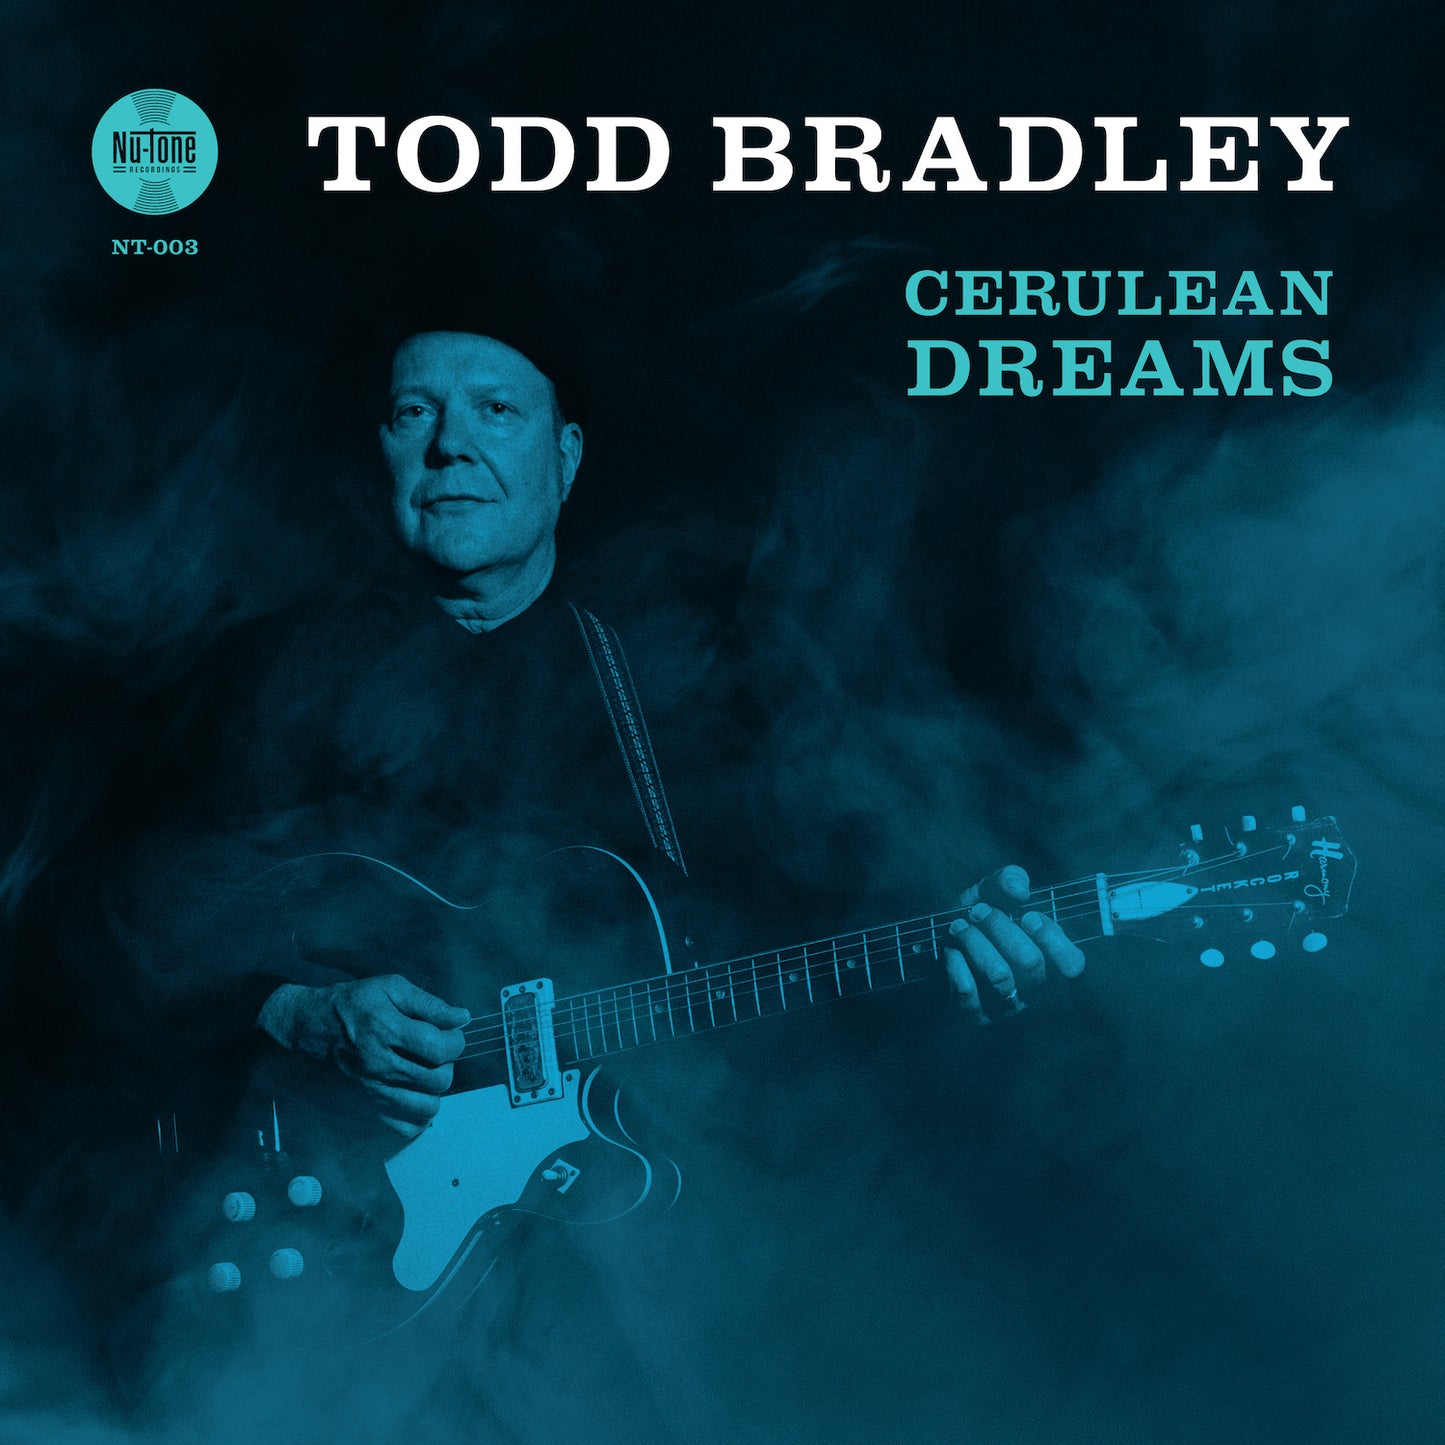 Todd Bradley "Cerulean Dreams" CD